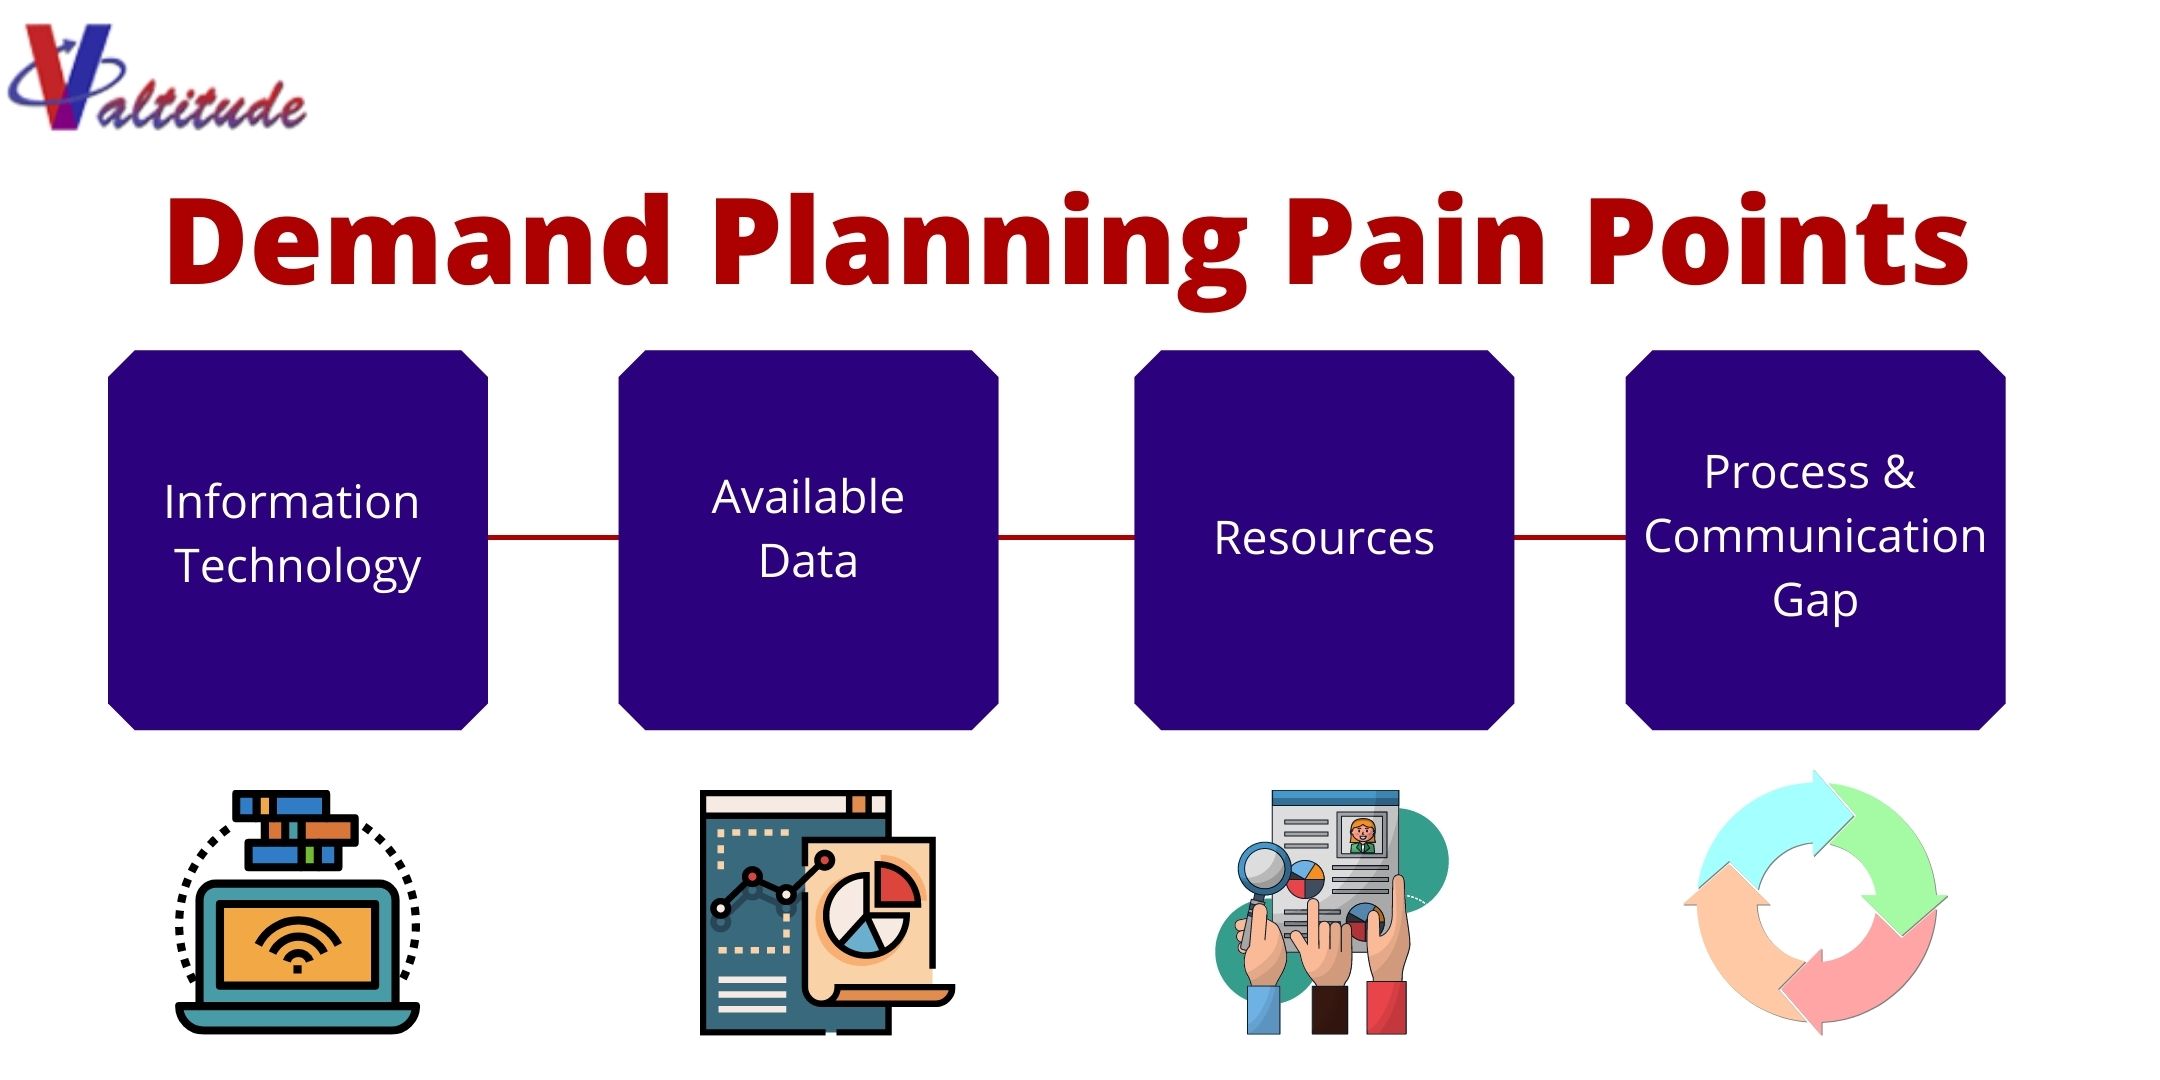 Demand Planning Pain Points